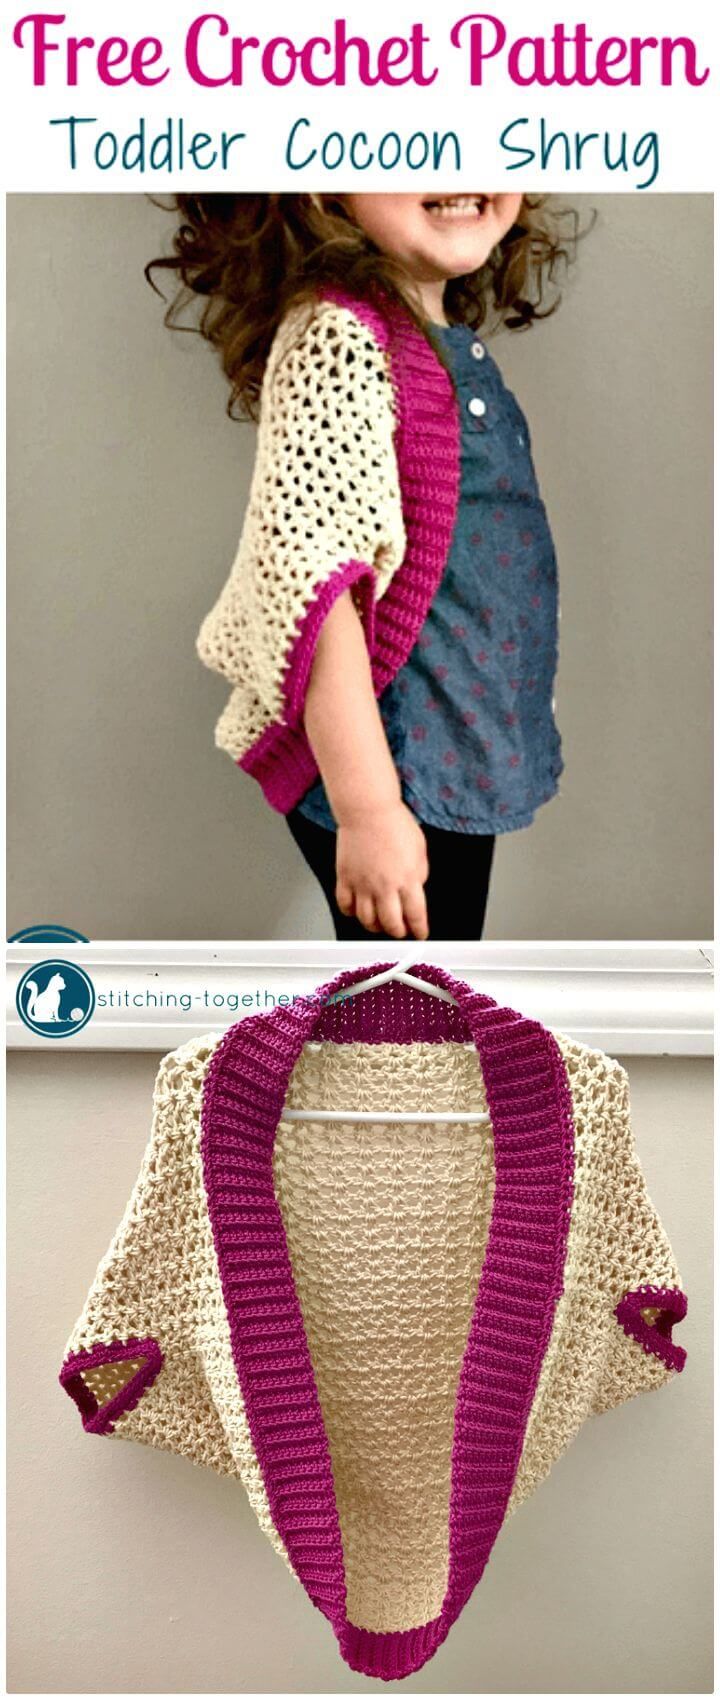 Crochet Shrug Patterns – 20 Free Unique Designs